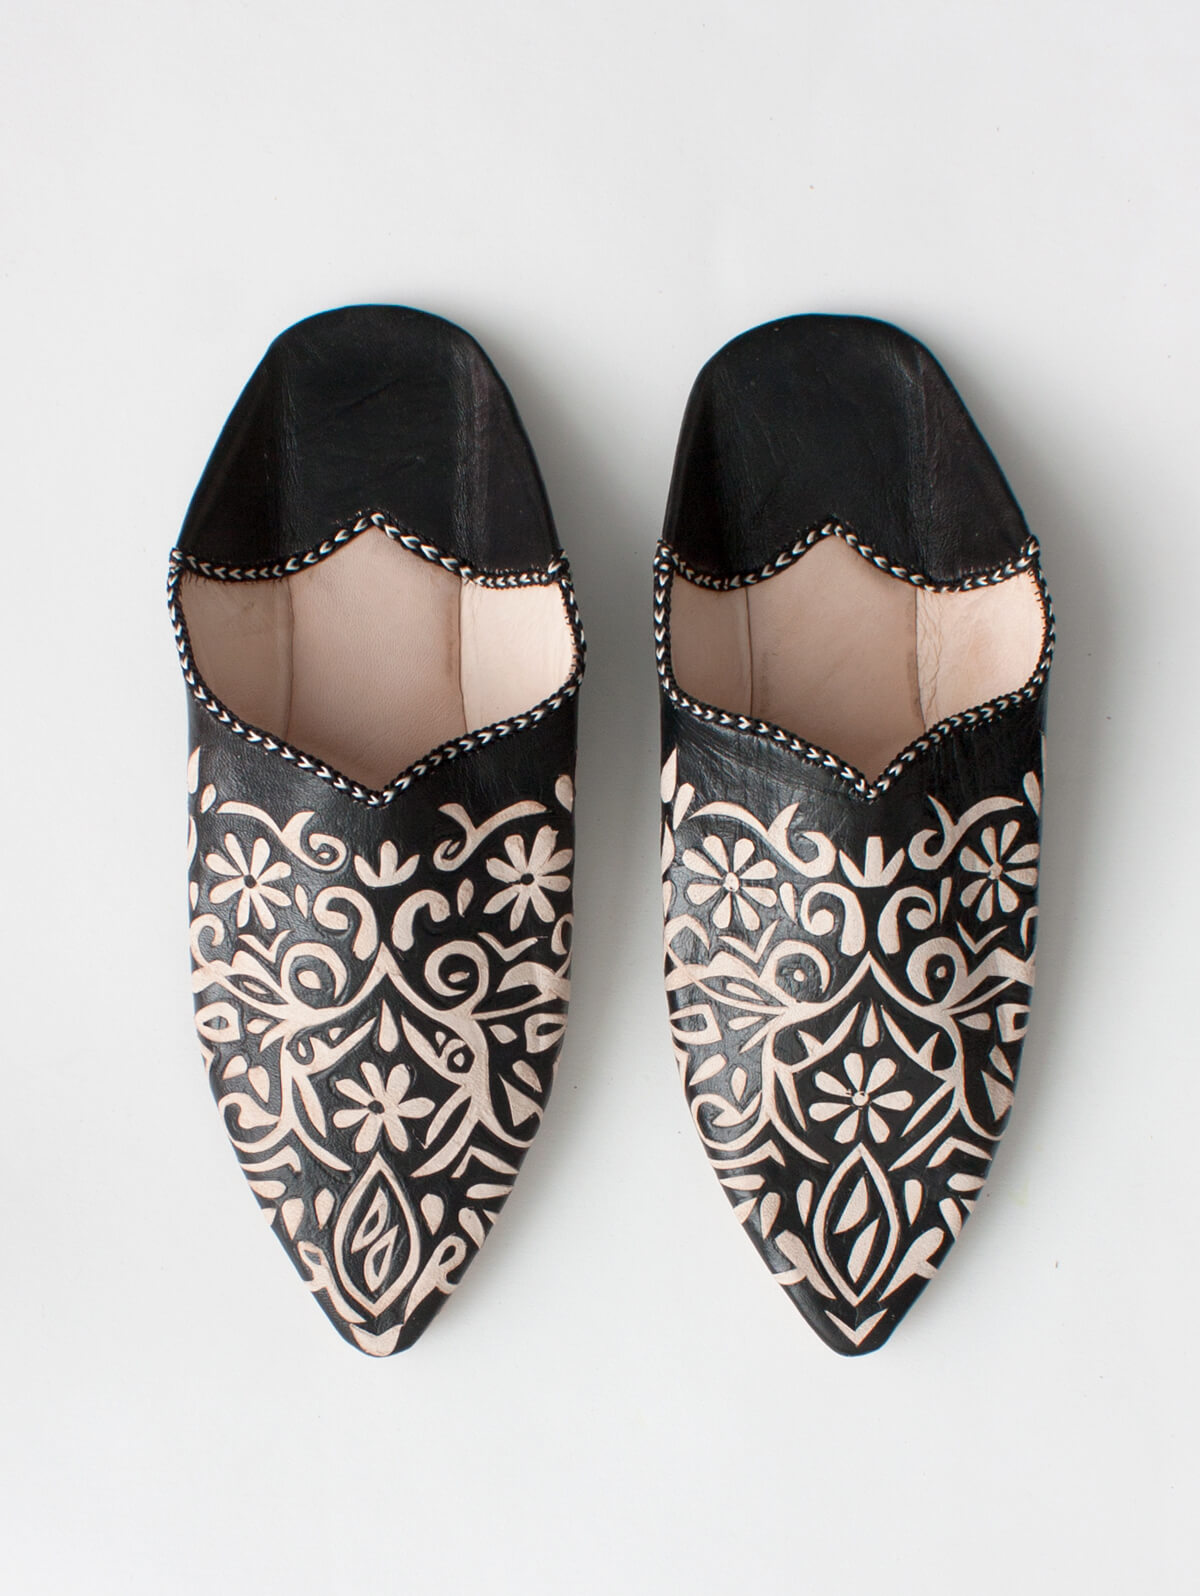 Moroccan Decorative Babouche Slippers, Black